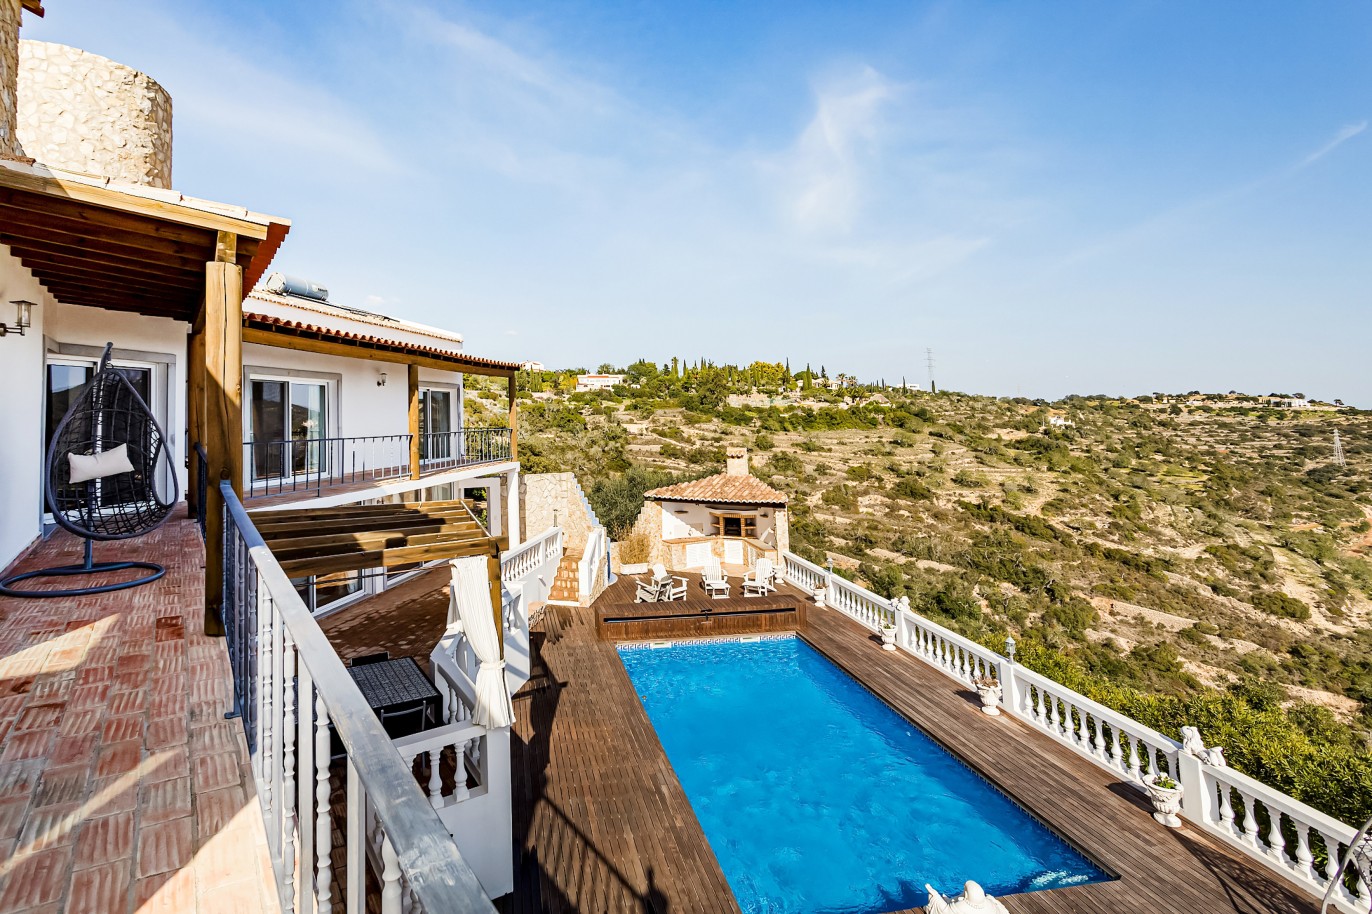 5 Bedroom Villa with sea view, for sale, in Faro, Algarve_218177